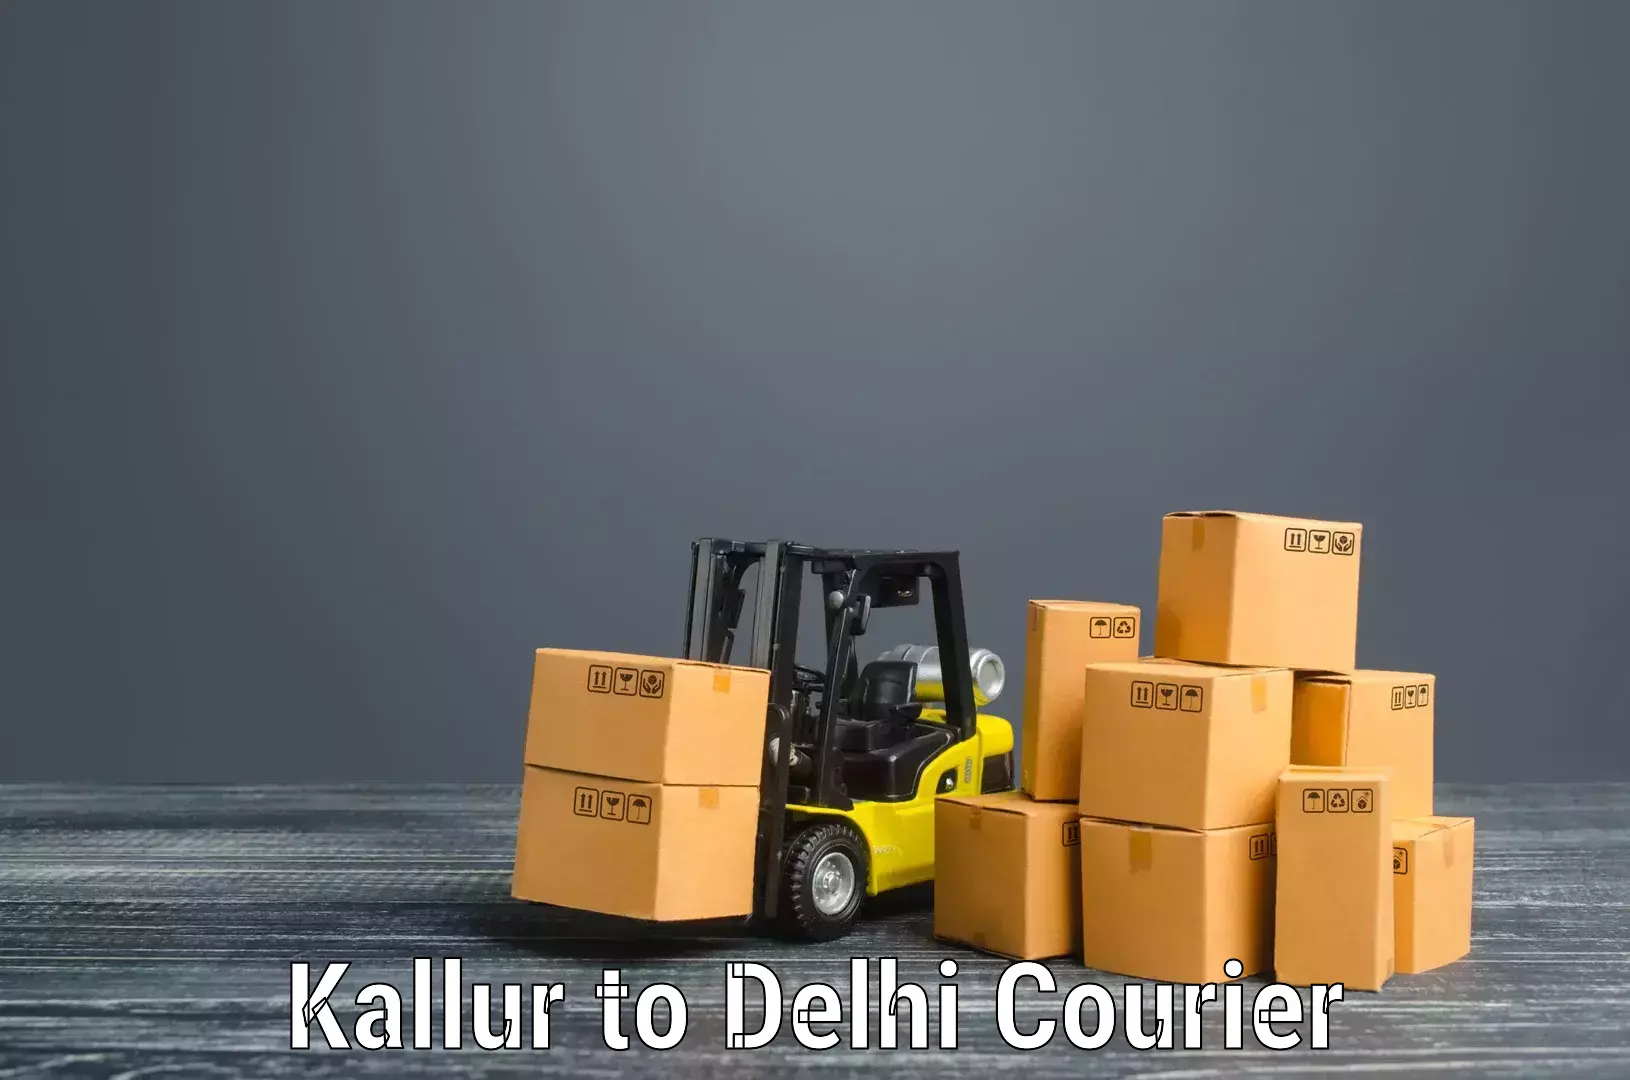 Furniture delivery service Kallur to University of Delhi